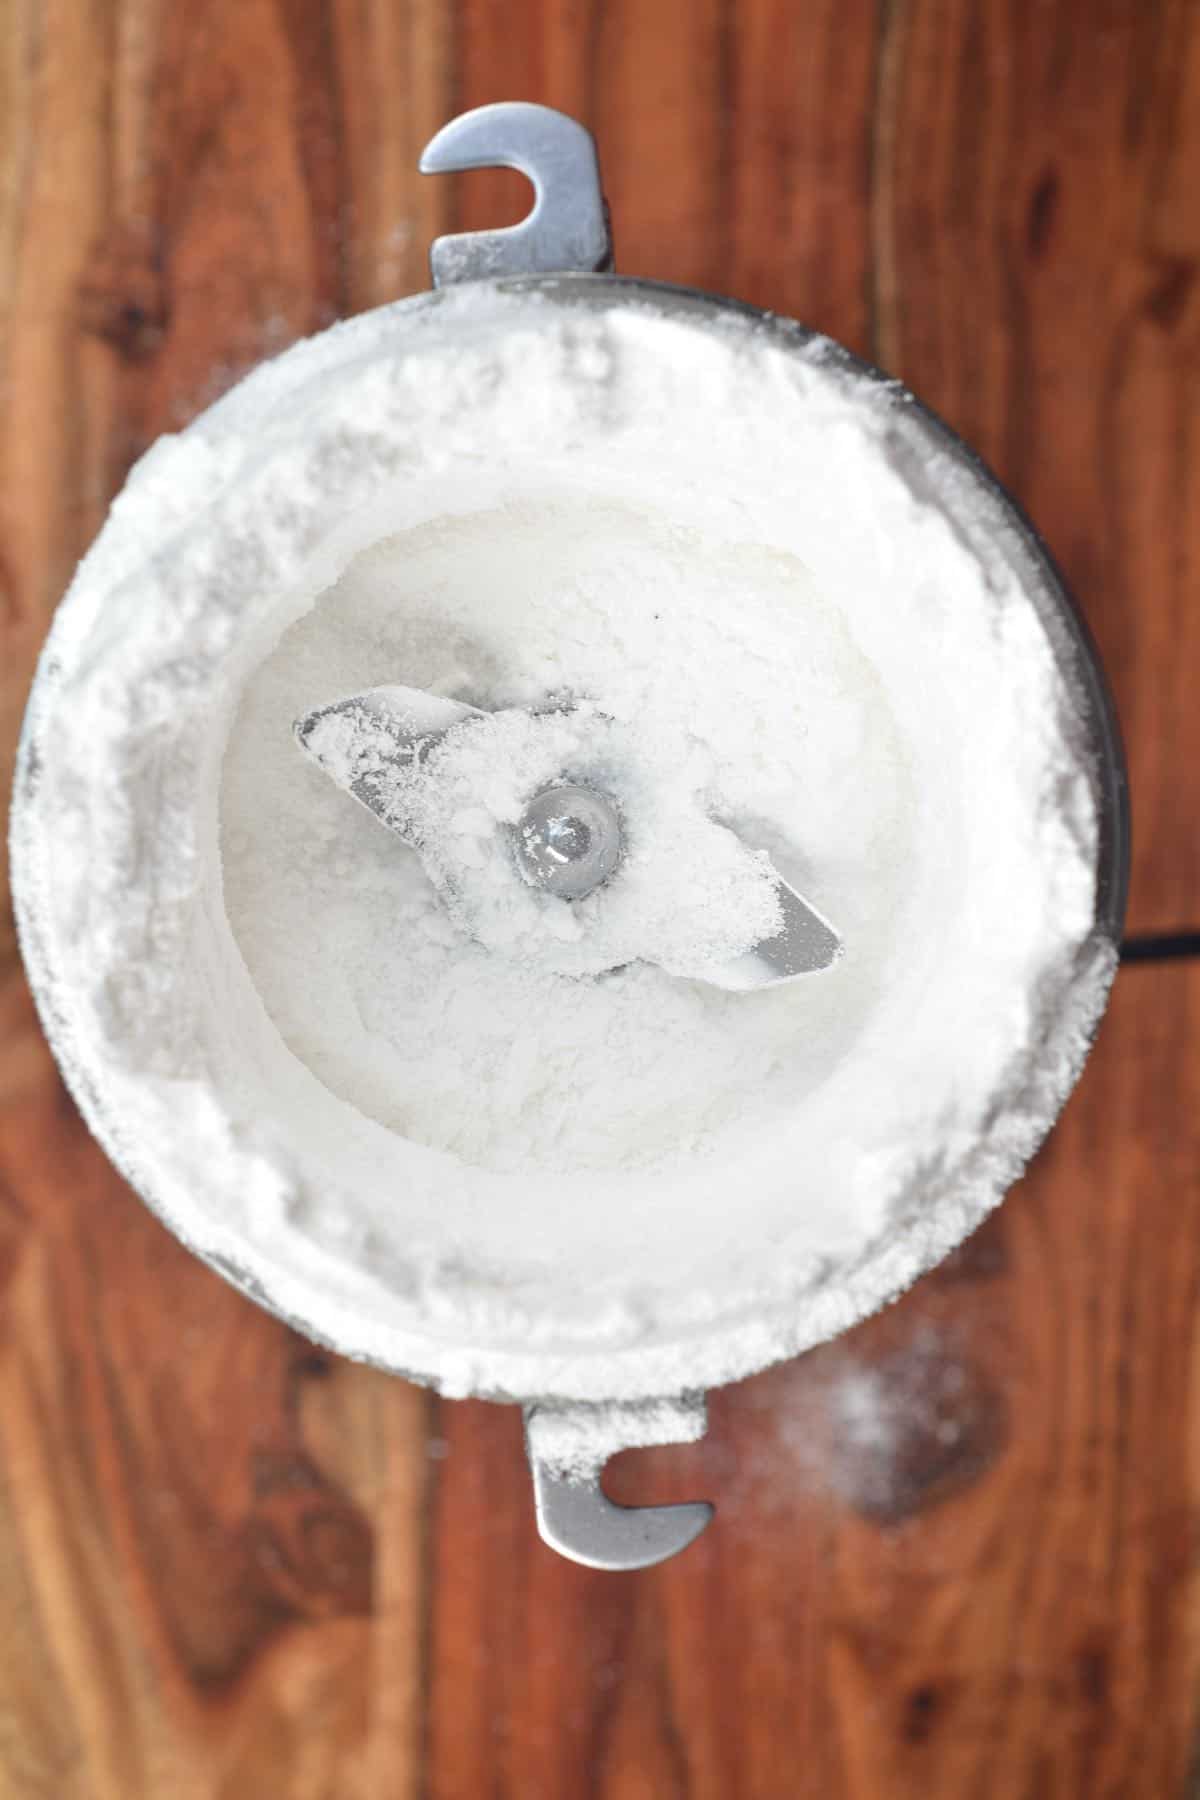 Powdered sugar in a grinder